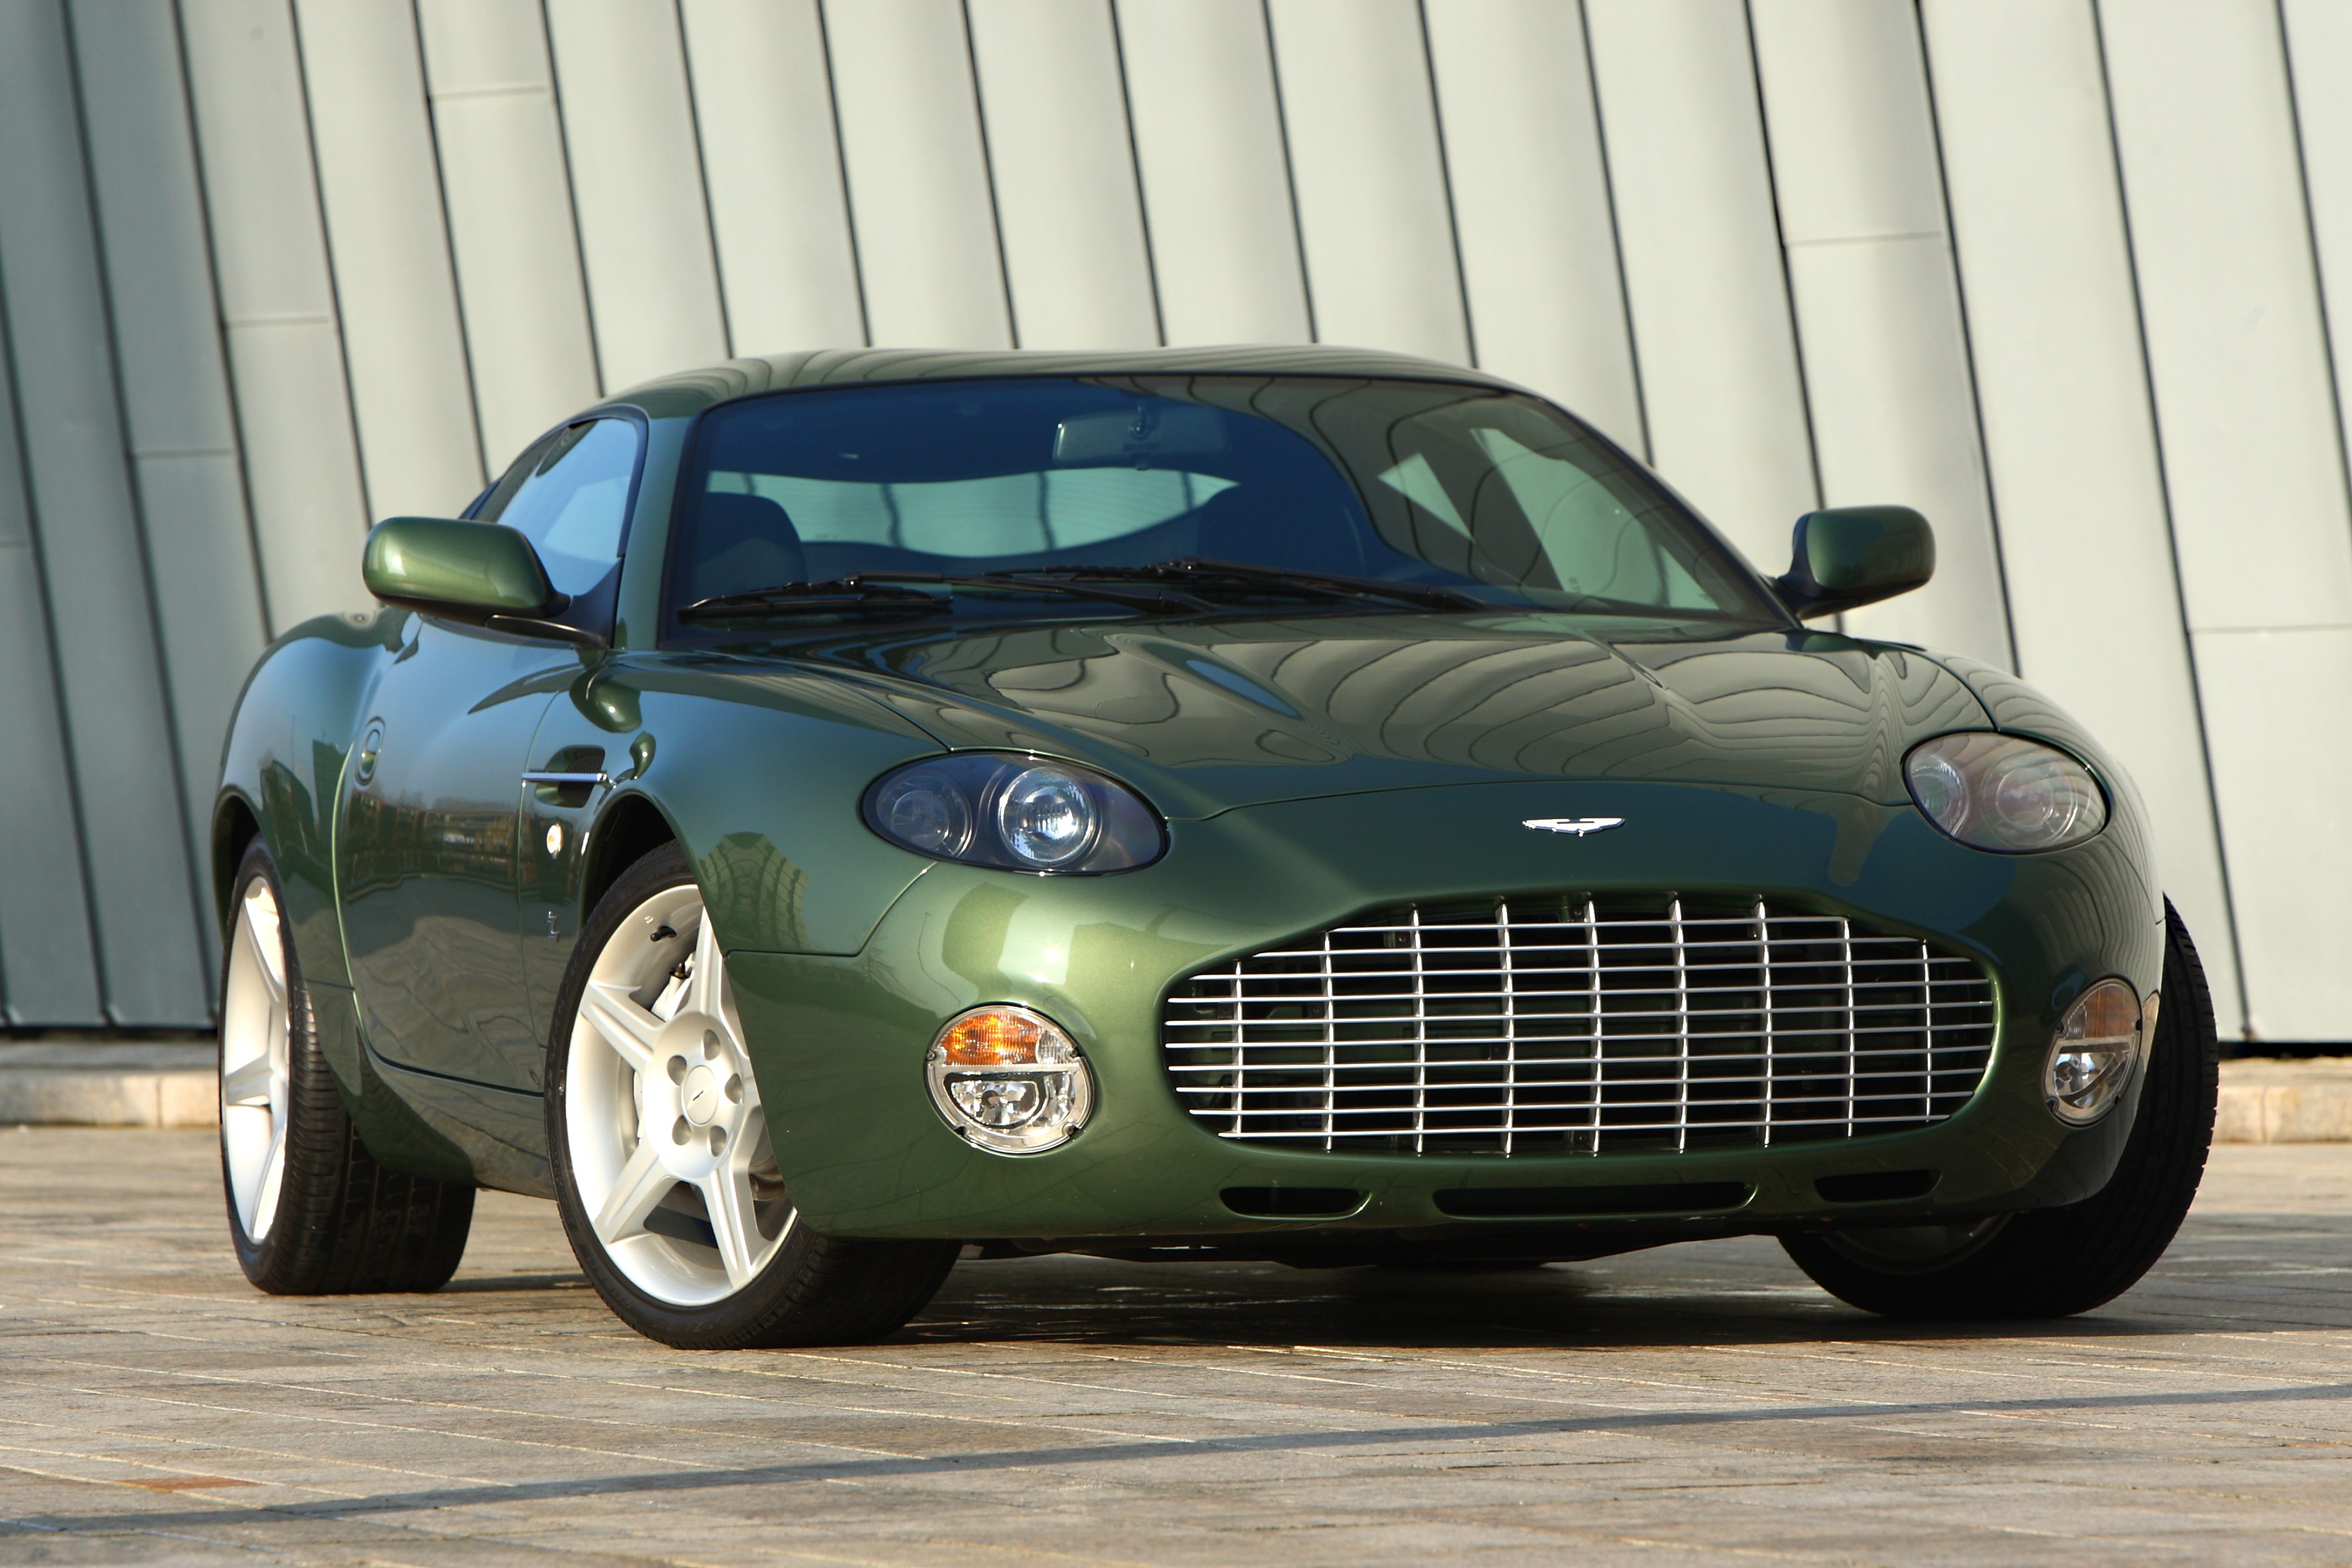 Aston Martin DB7 Zagato Backgrounds, Compatible - PC, Mobile, Gadgets| 3543x2362 px